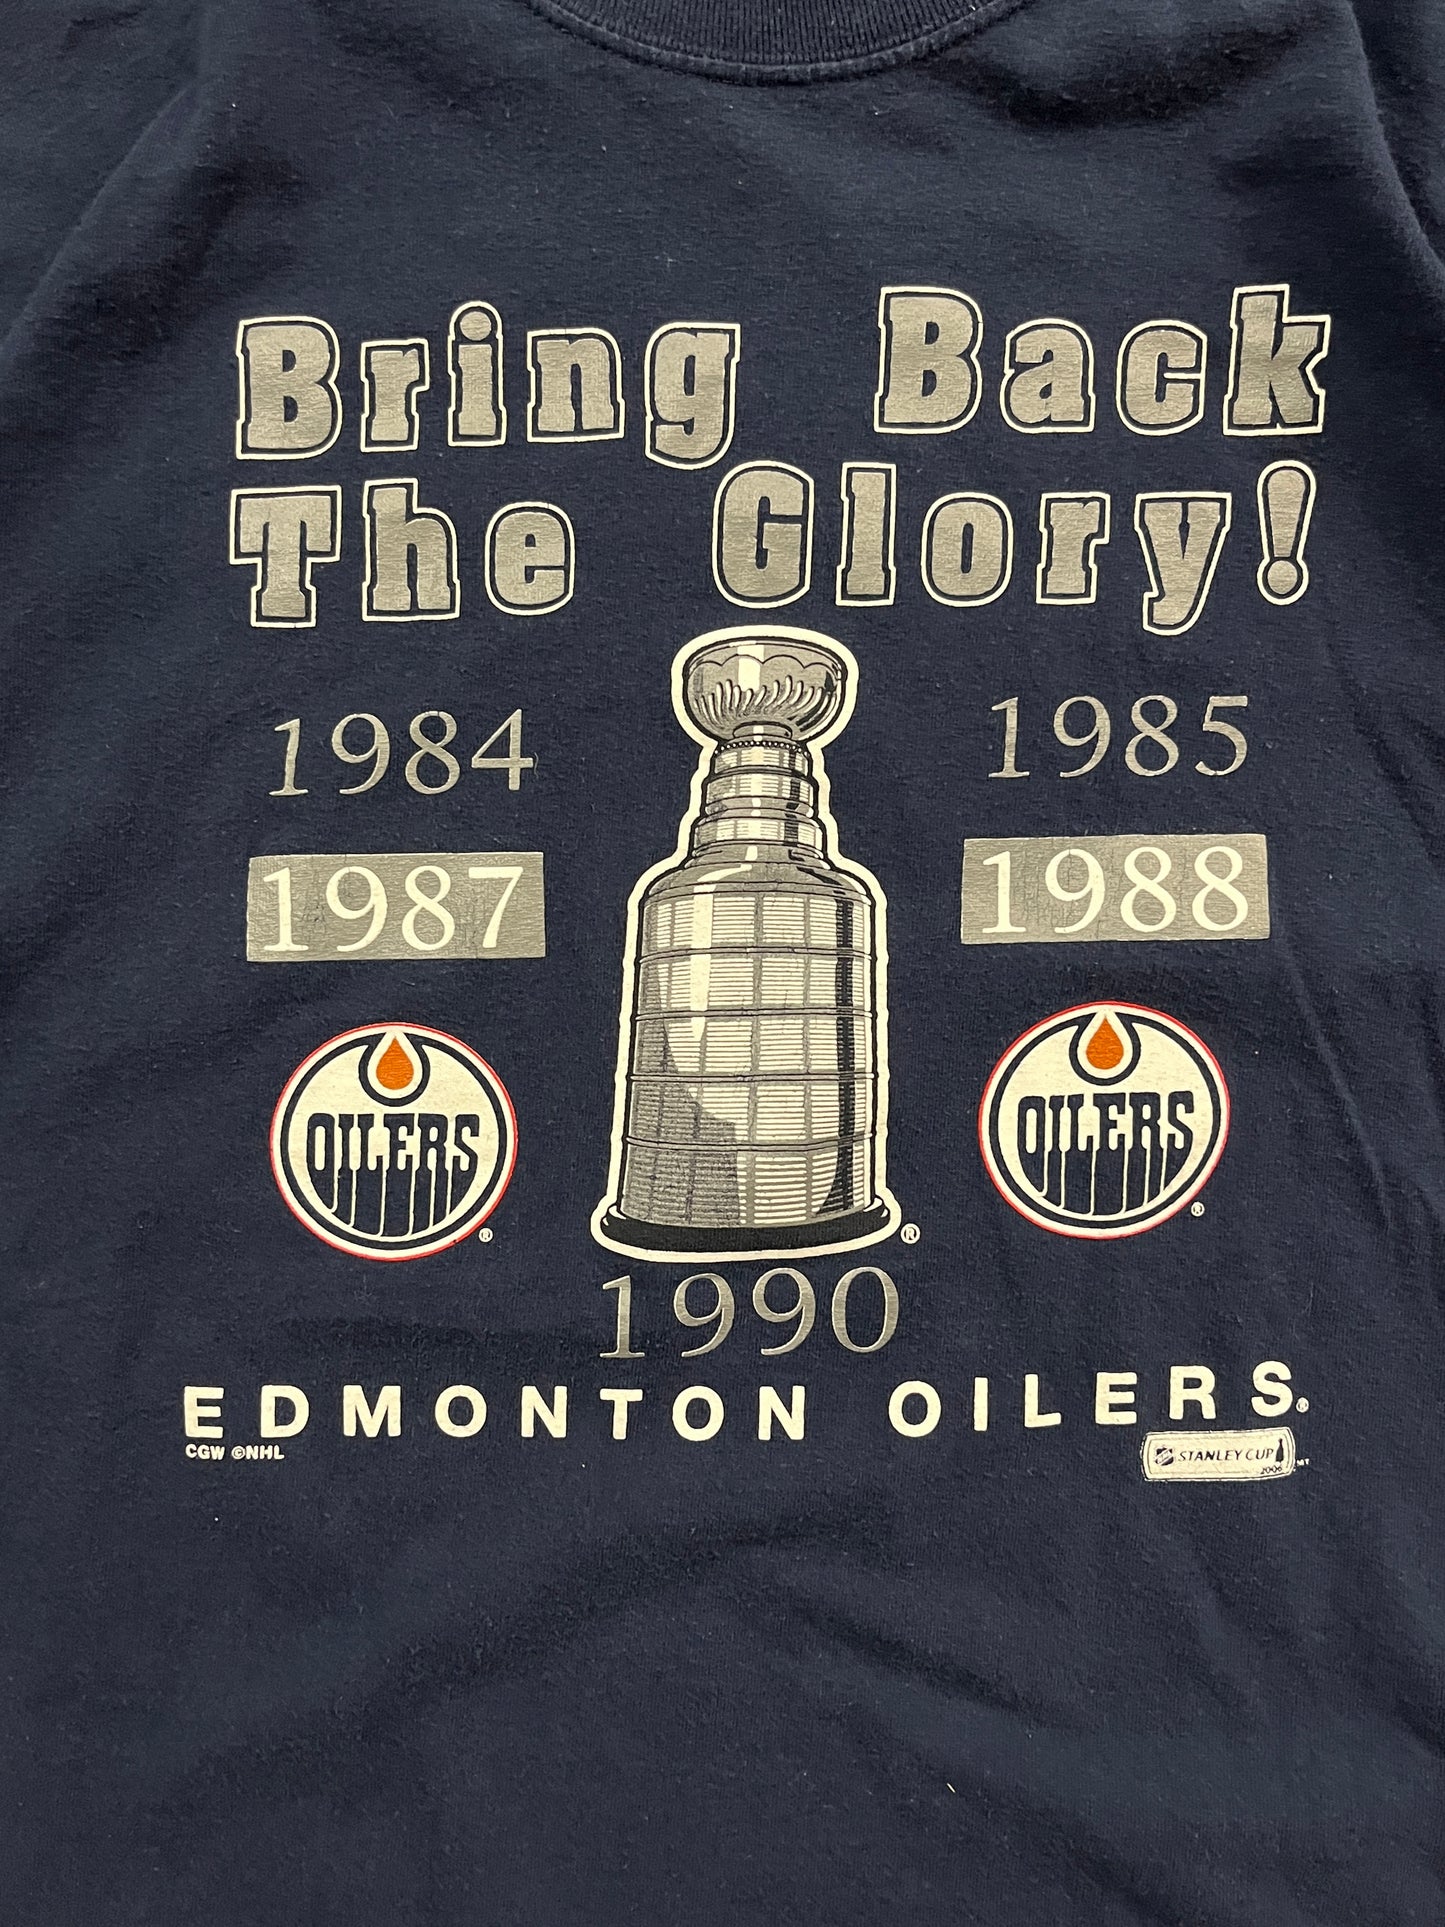 Vintage Edmonton Oilers "Bring Back The Glory" Tee